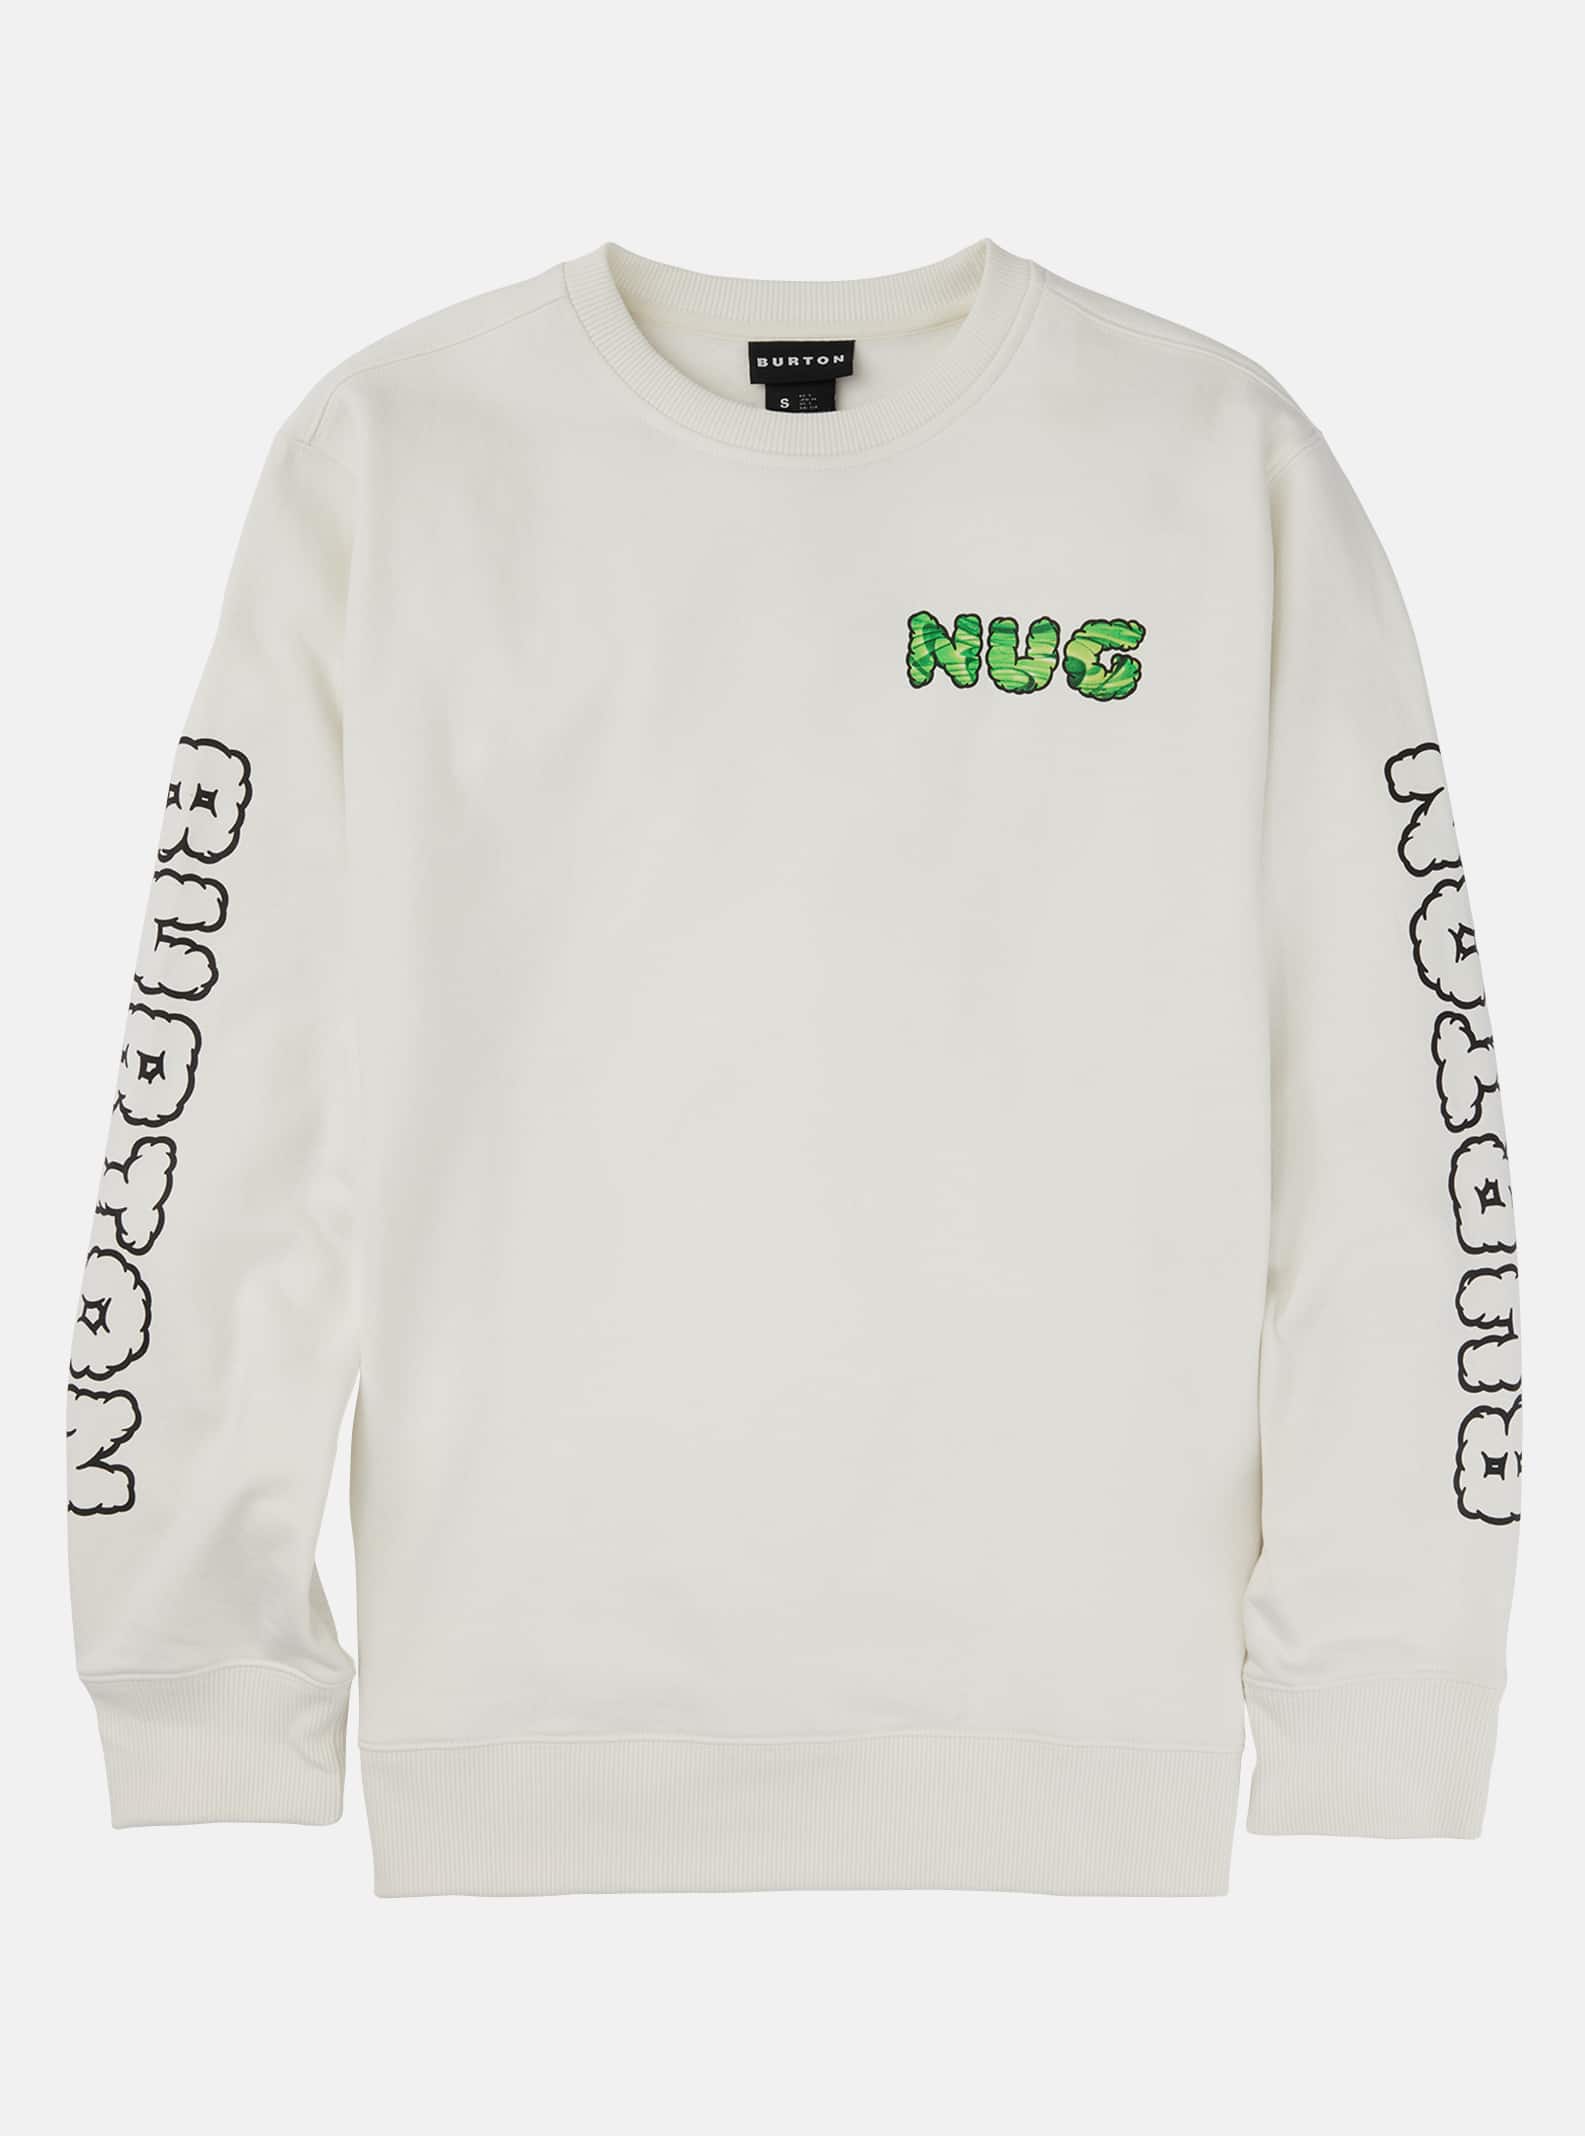 Burton 2011 Nug Crew sweatshirt, Stout White, M